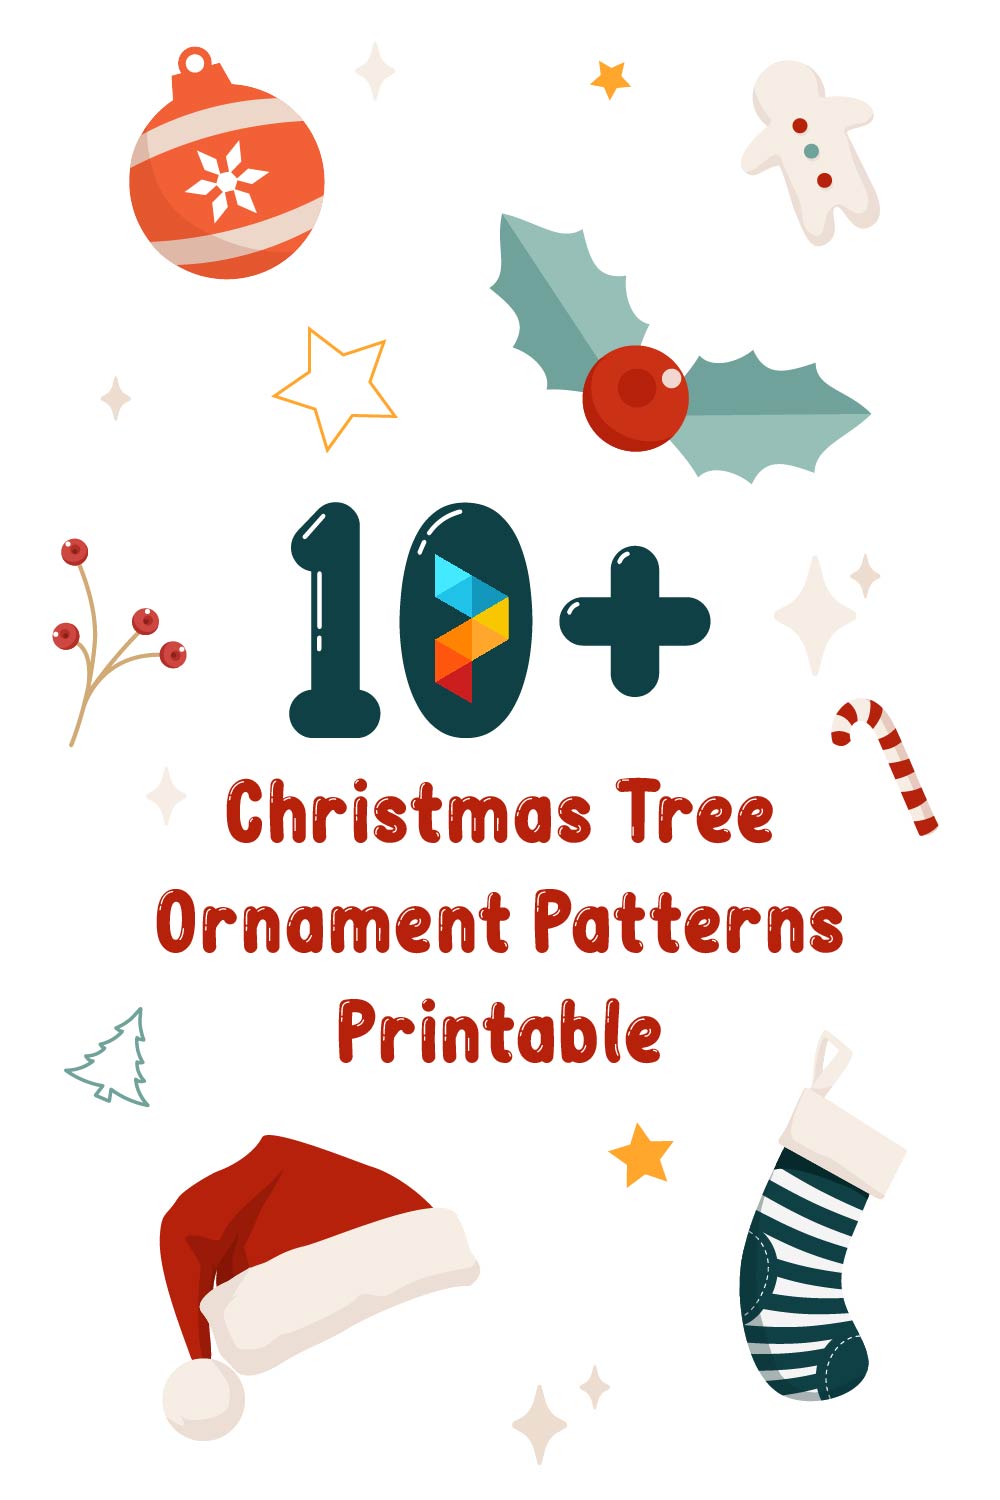 Christmas Tree Ornament Patterns Printable